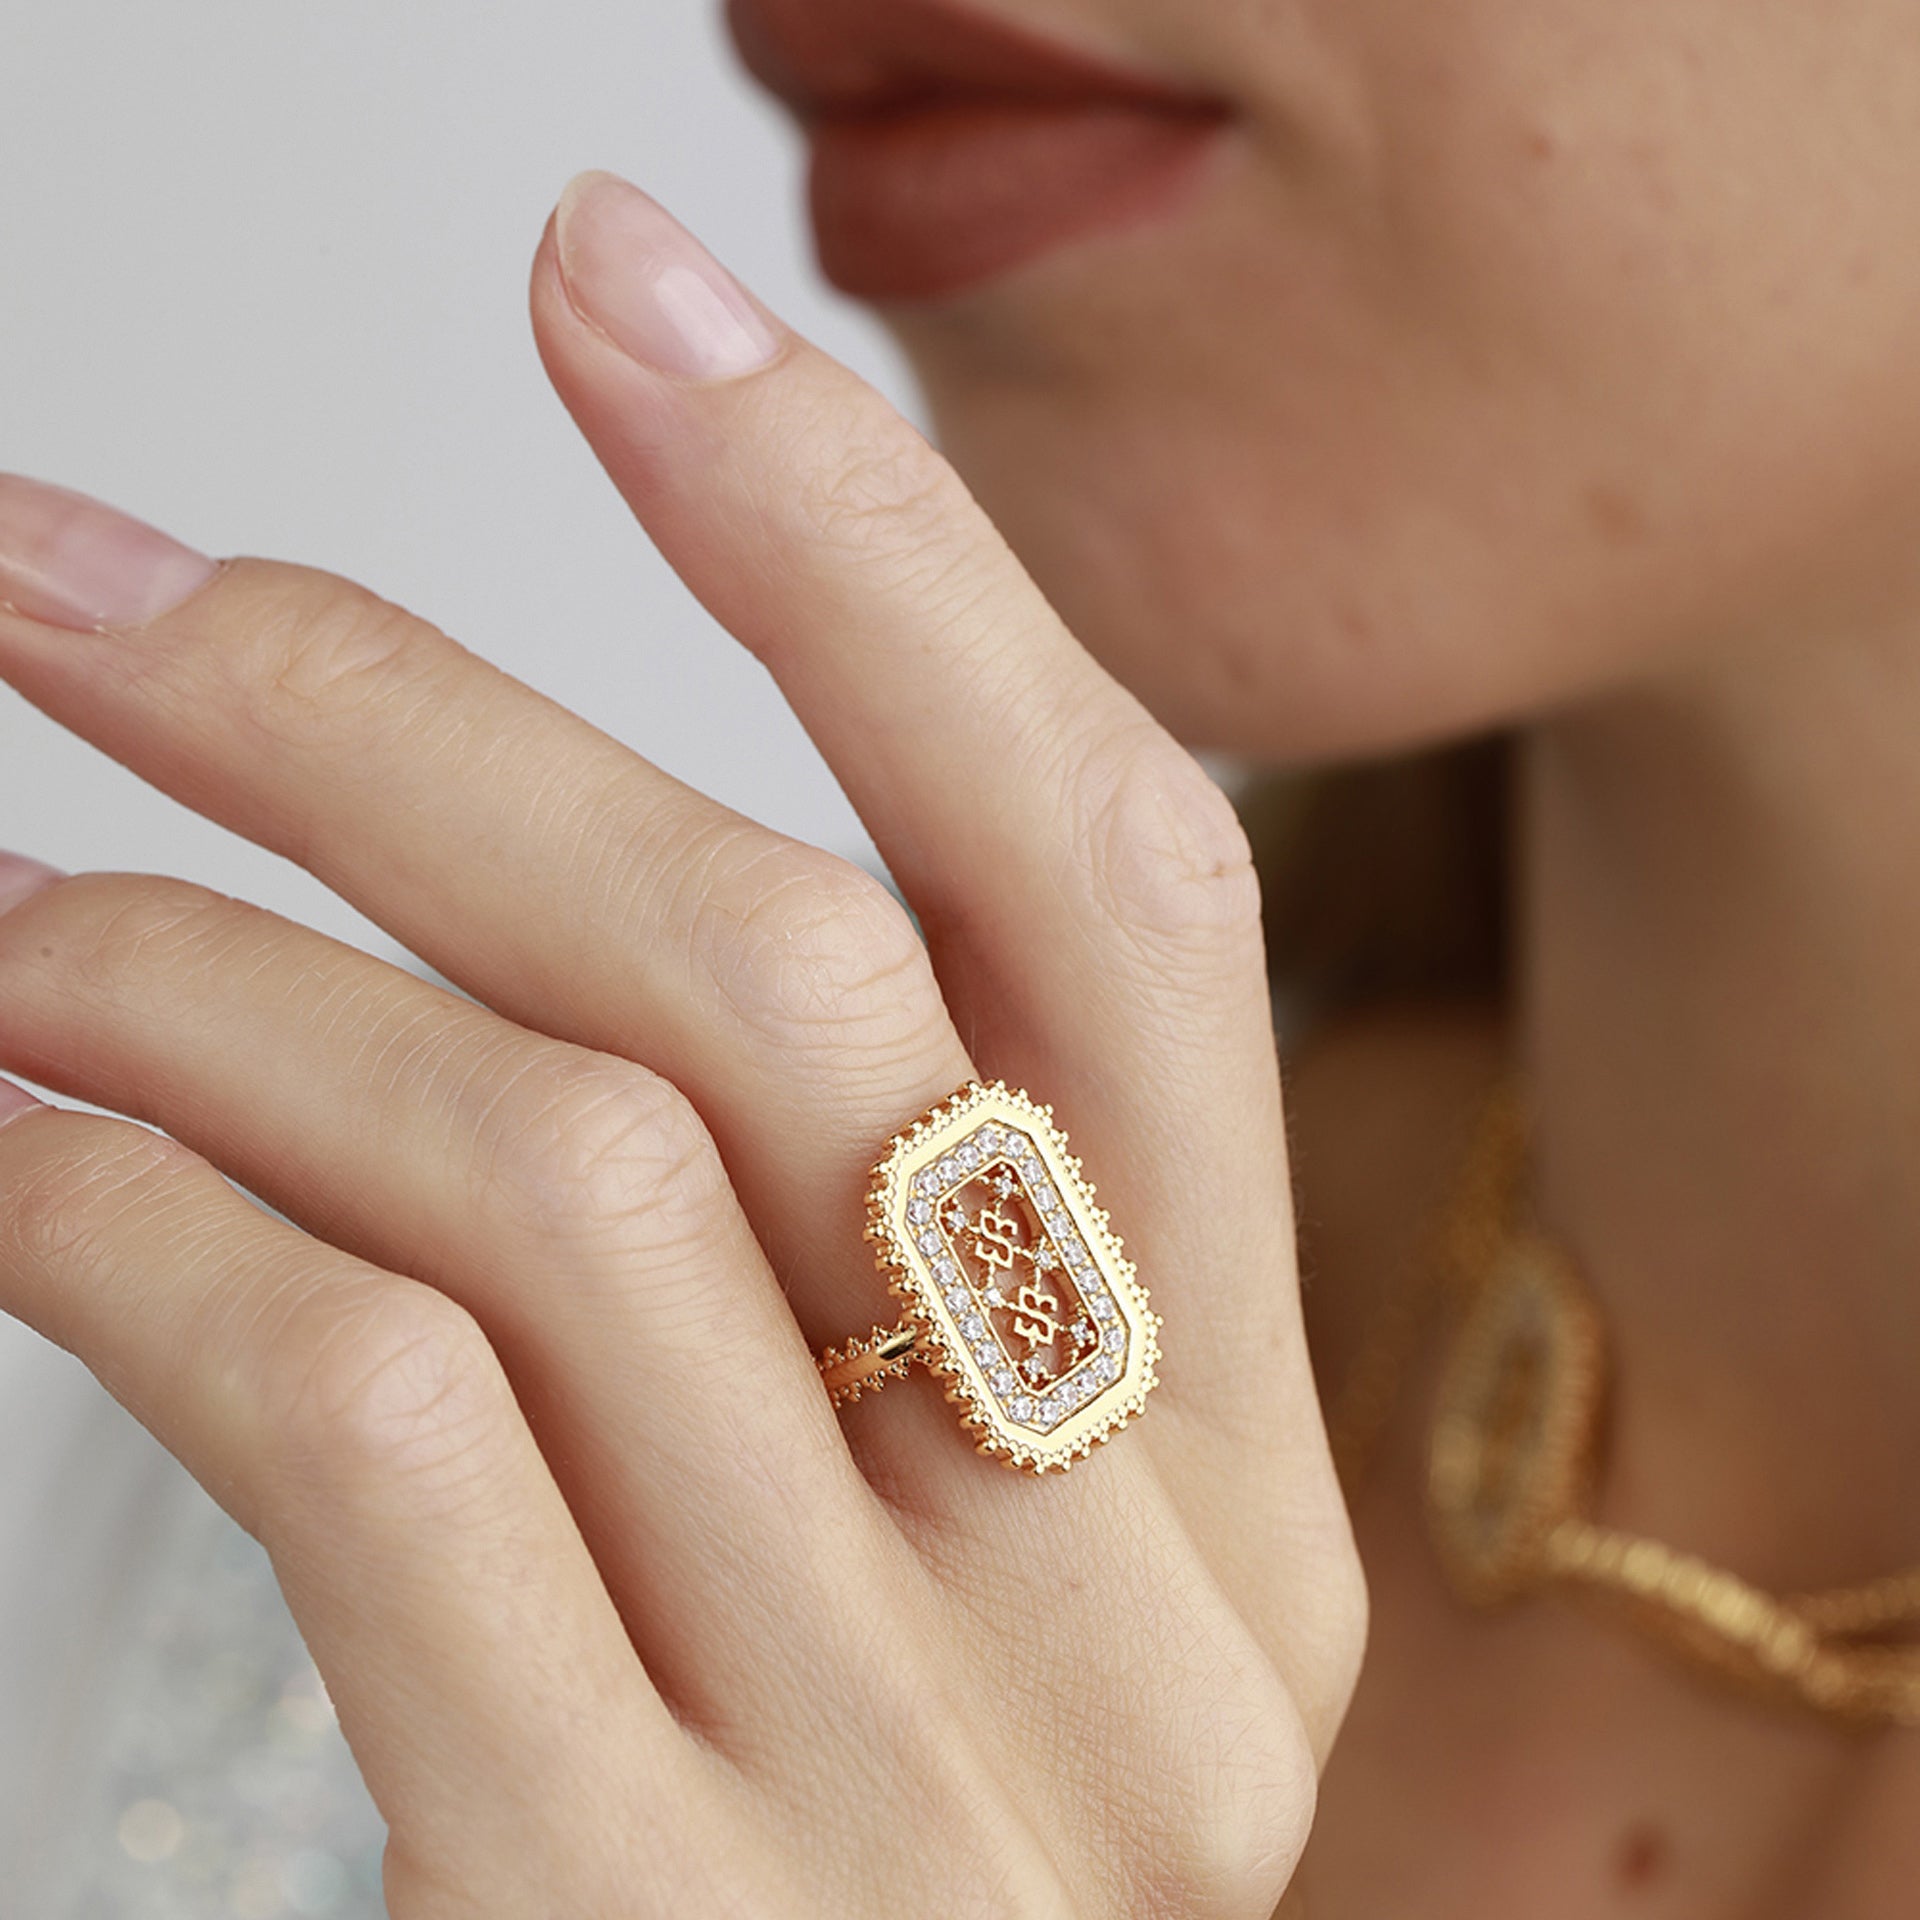 Ritaj Gold Ring From Le-Soleil